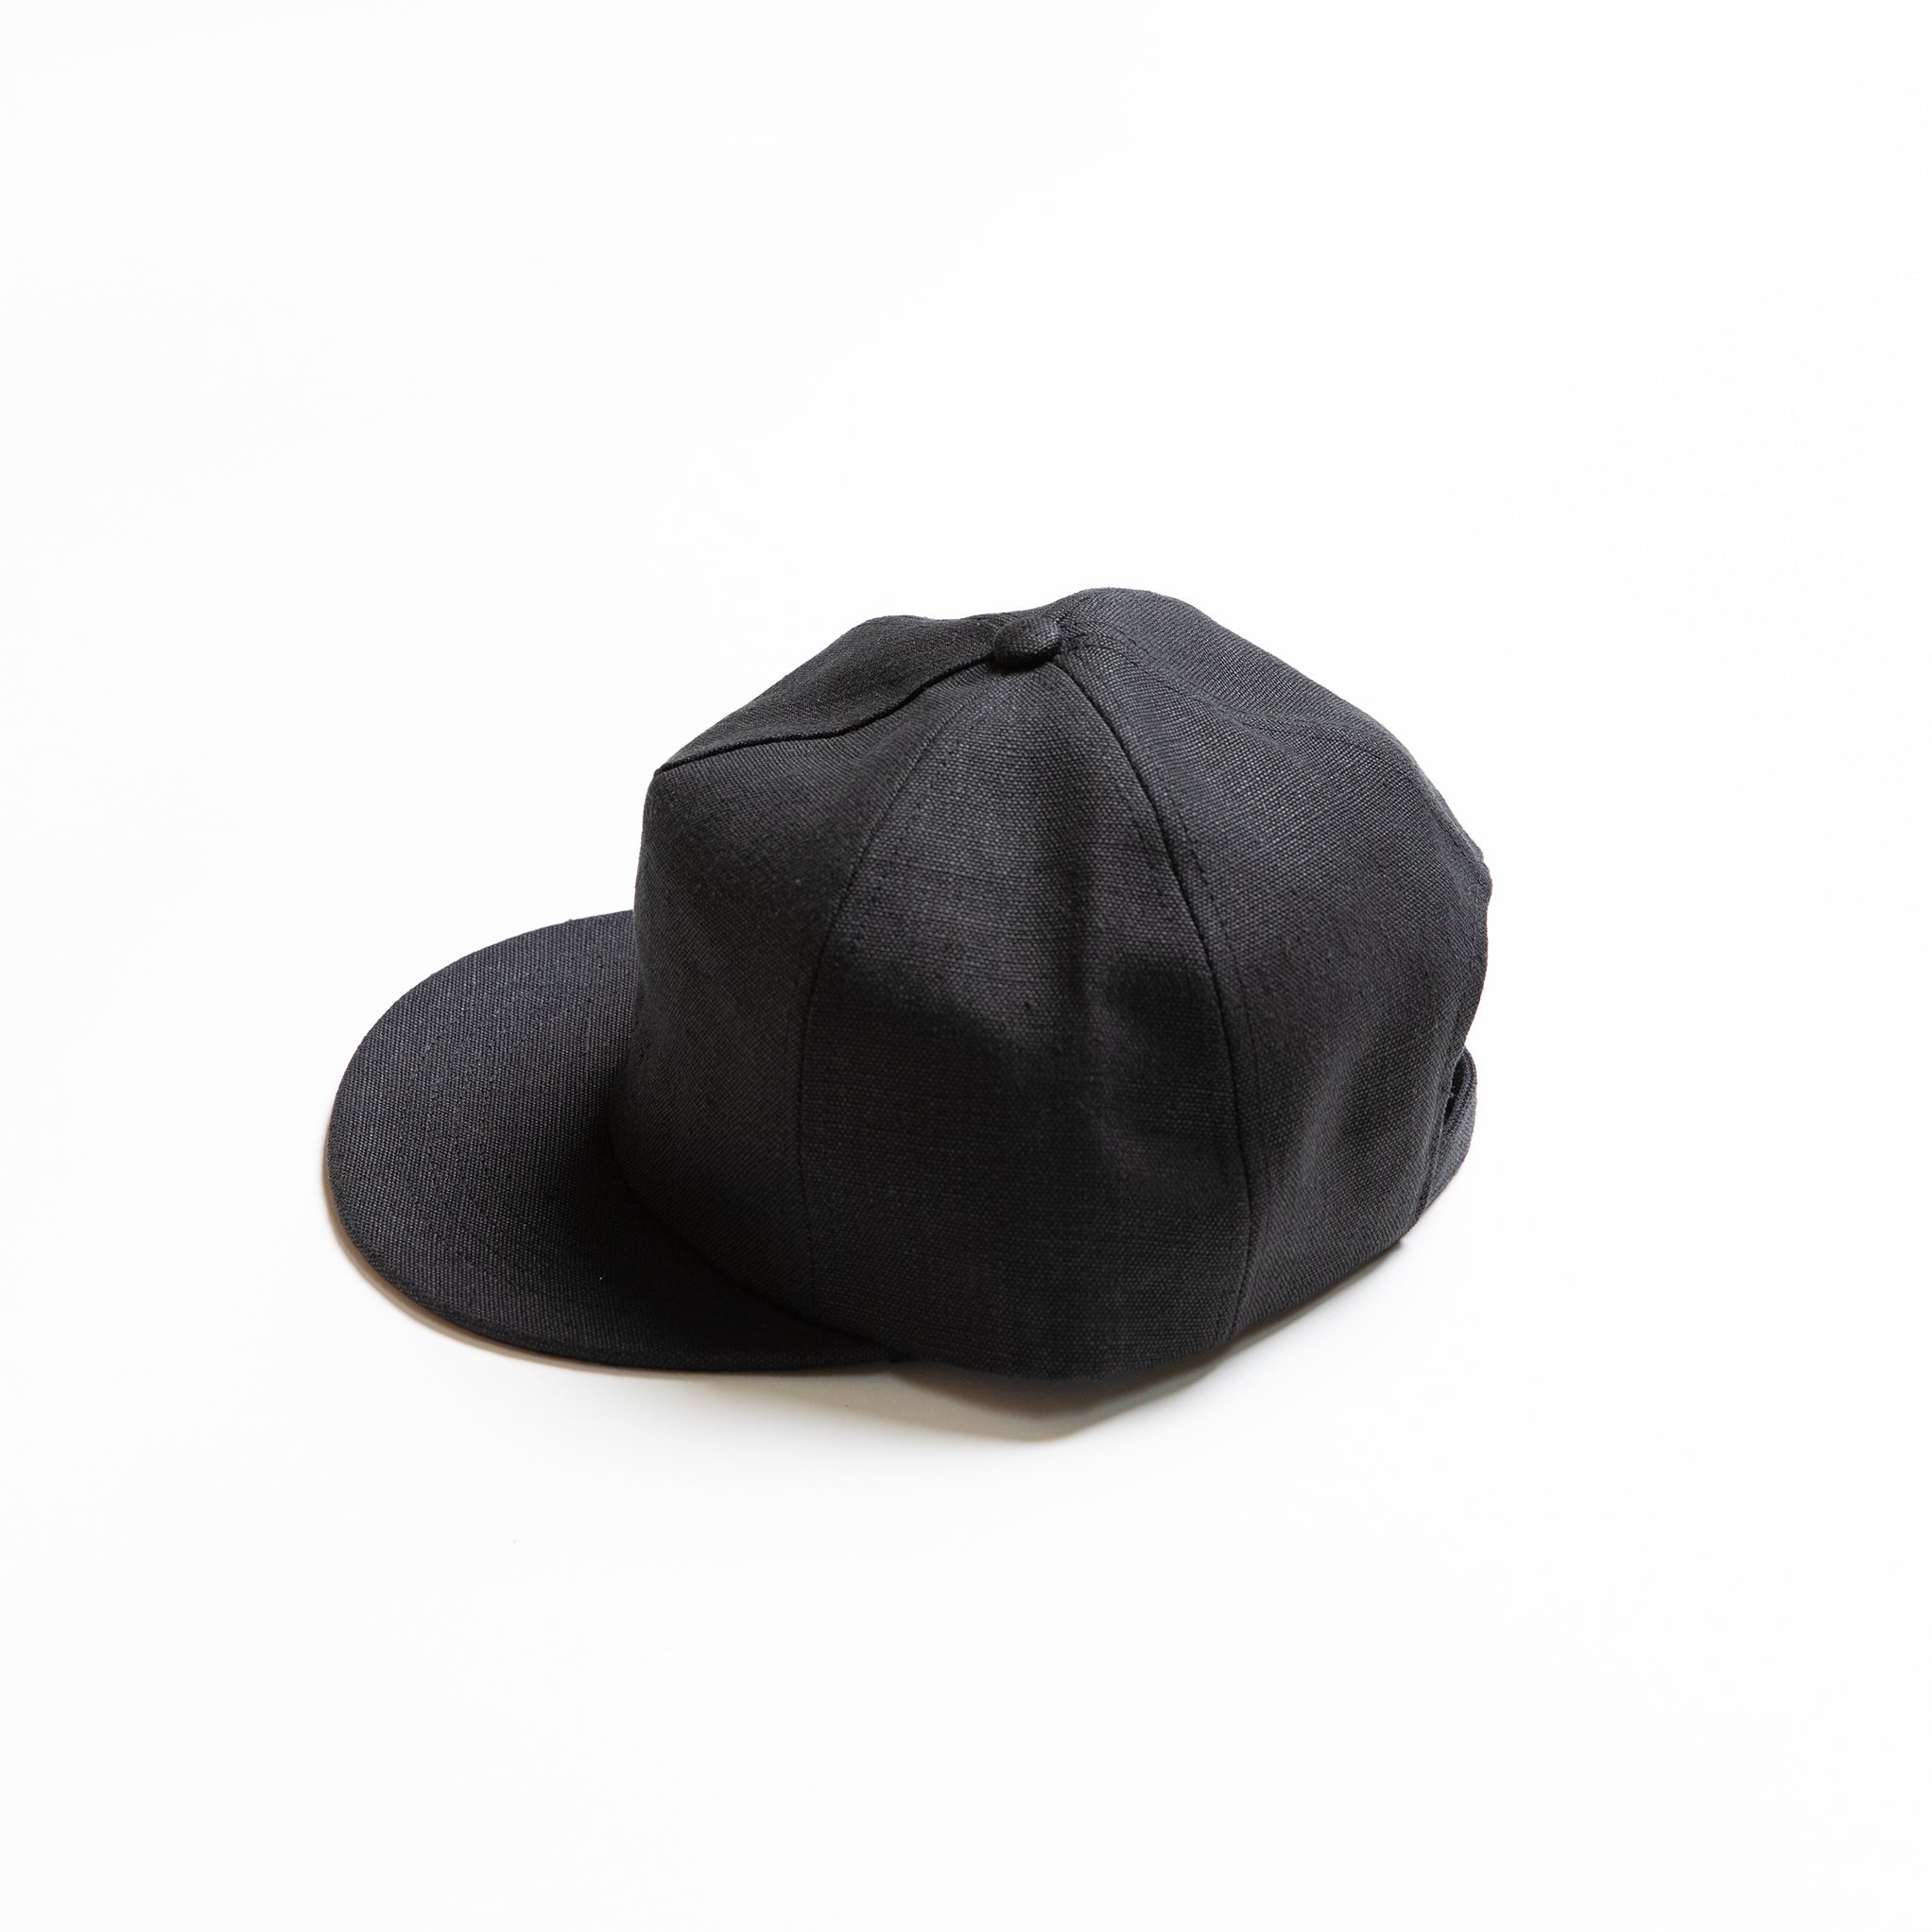 Reel Ball Cap - Black 100% Hemp